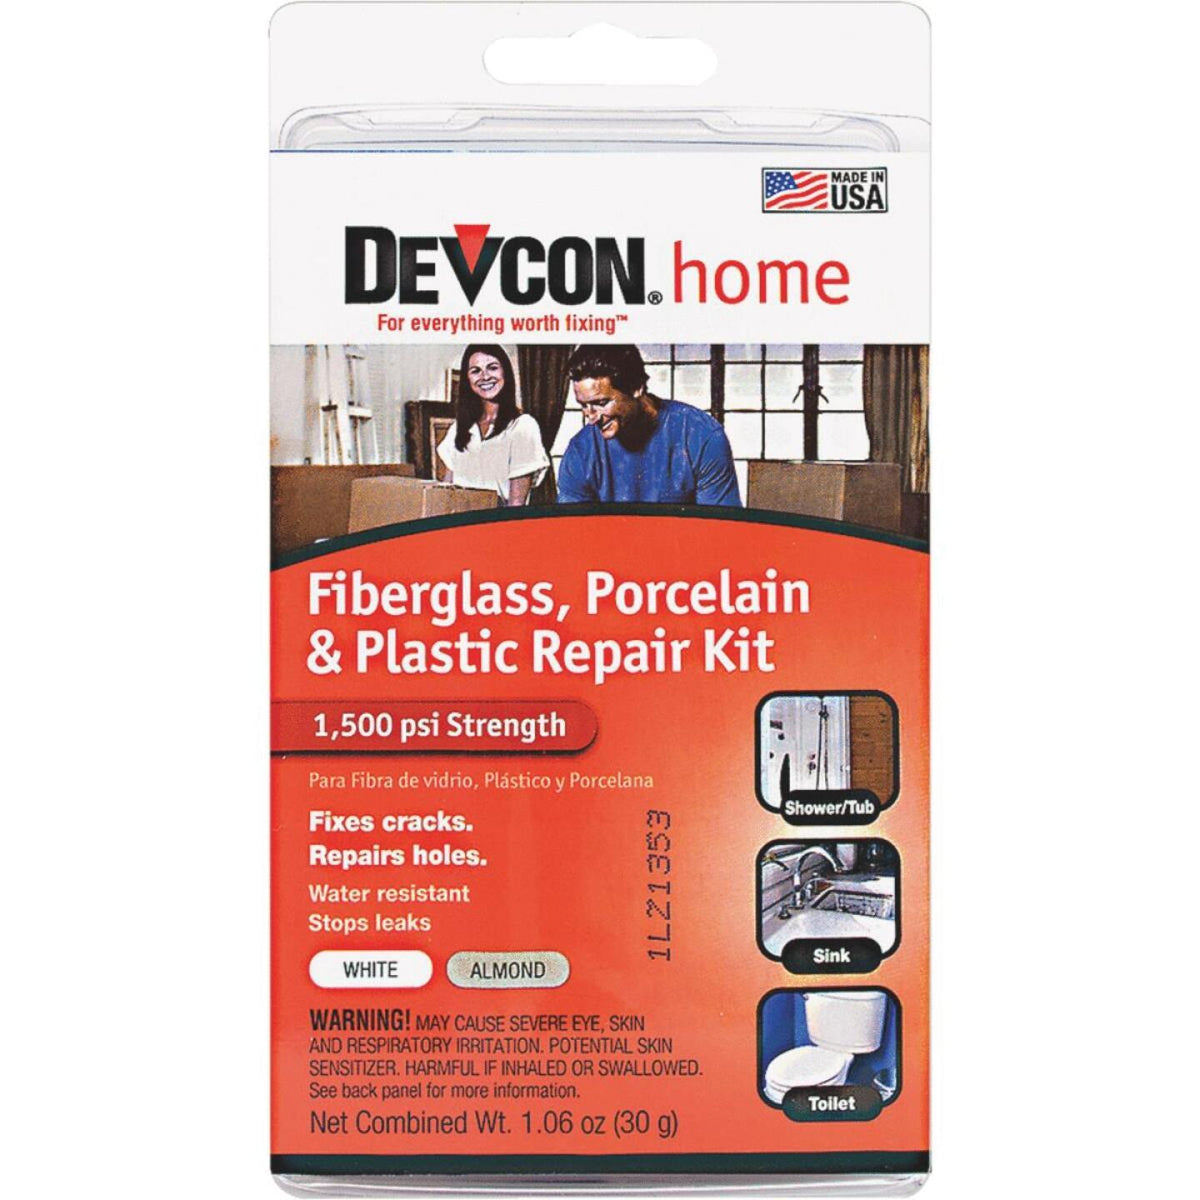 Devcon 1.06 Oz. Fiberglass, Porcelain & Plastic Epoxy Repair Kit -  Endicott, NY - Owego, NY - Owego Endicott Agway